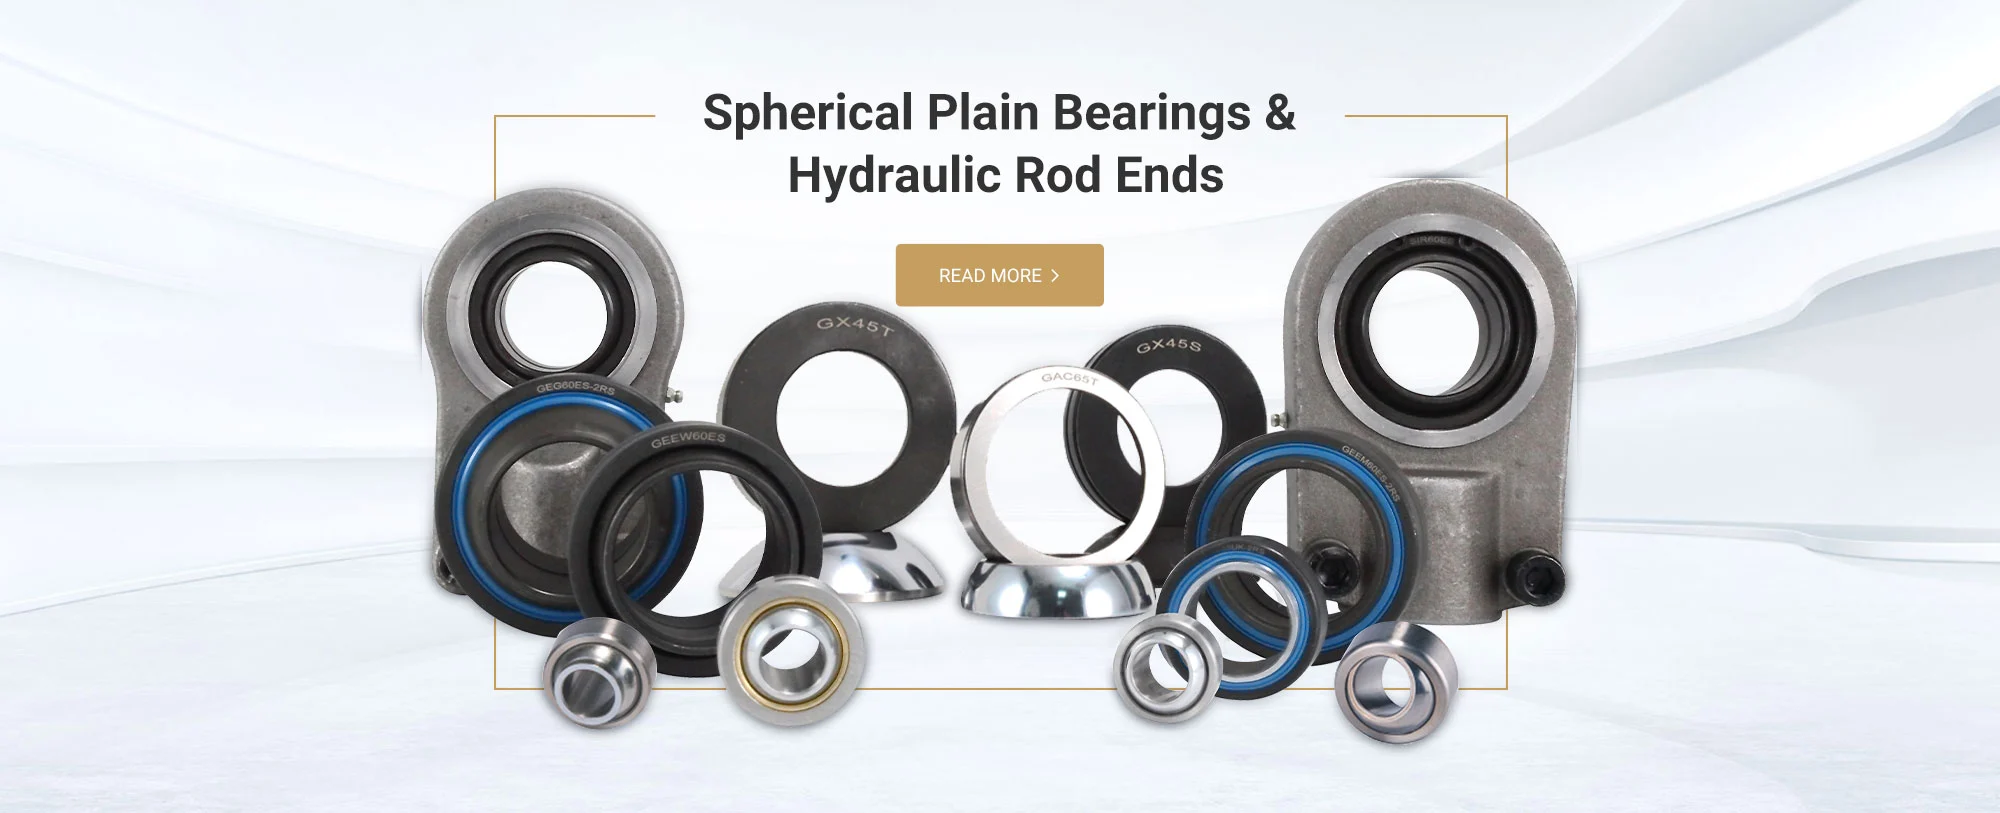 Spherical Plain Bearings & Hydraulic Rod Ends